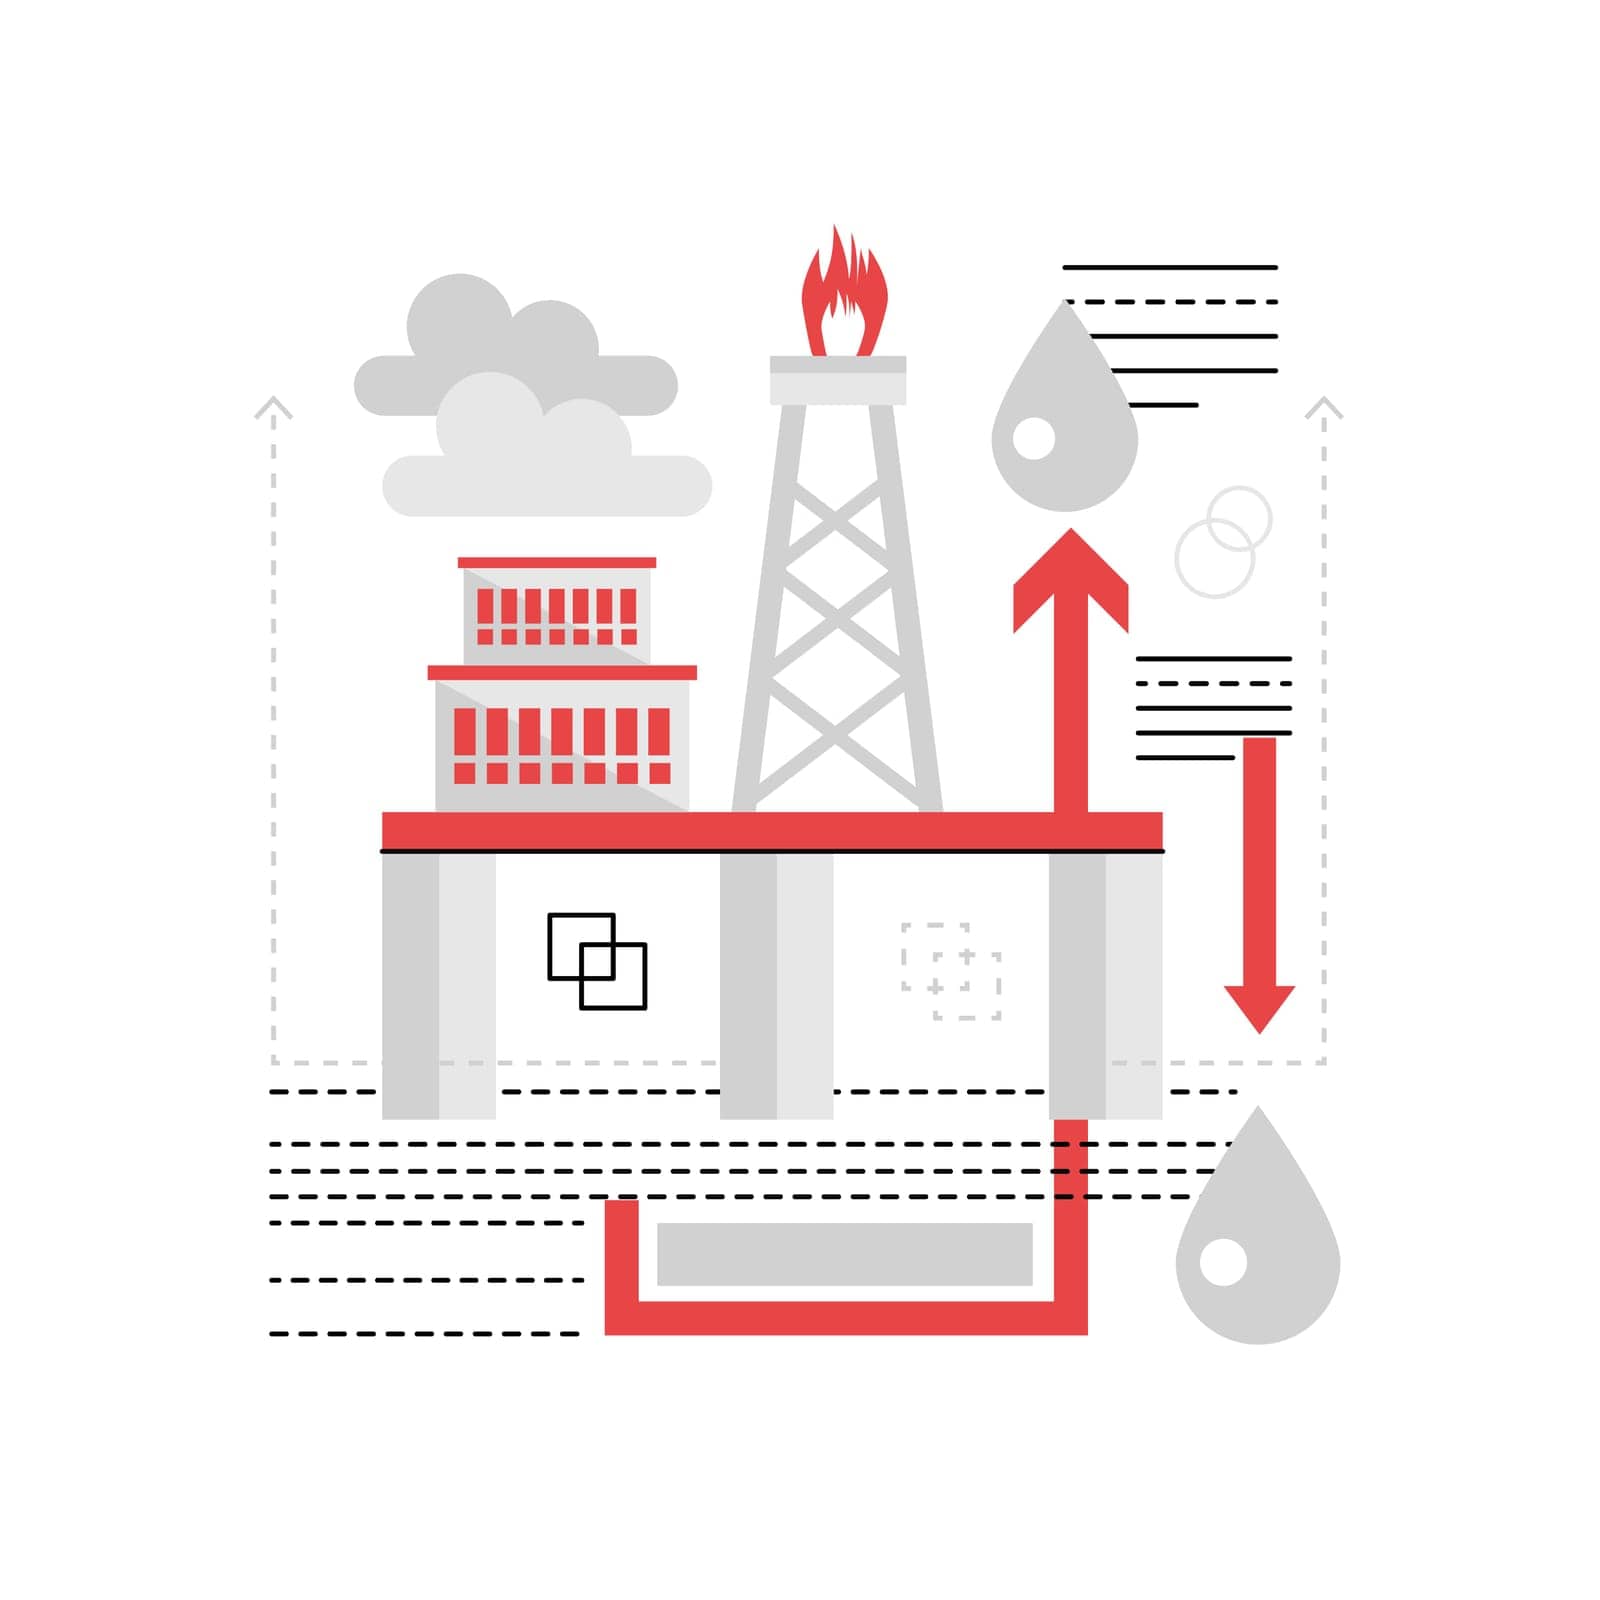 Industrial oil platform. Petroleum industry, oil sea drilling platform vector illustration